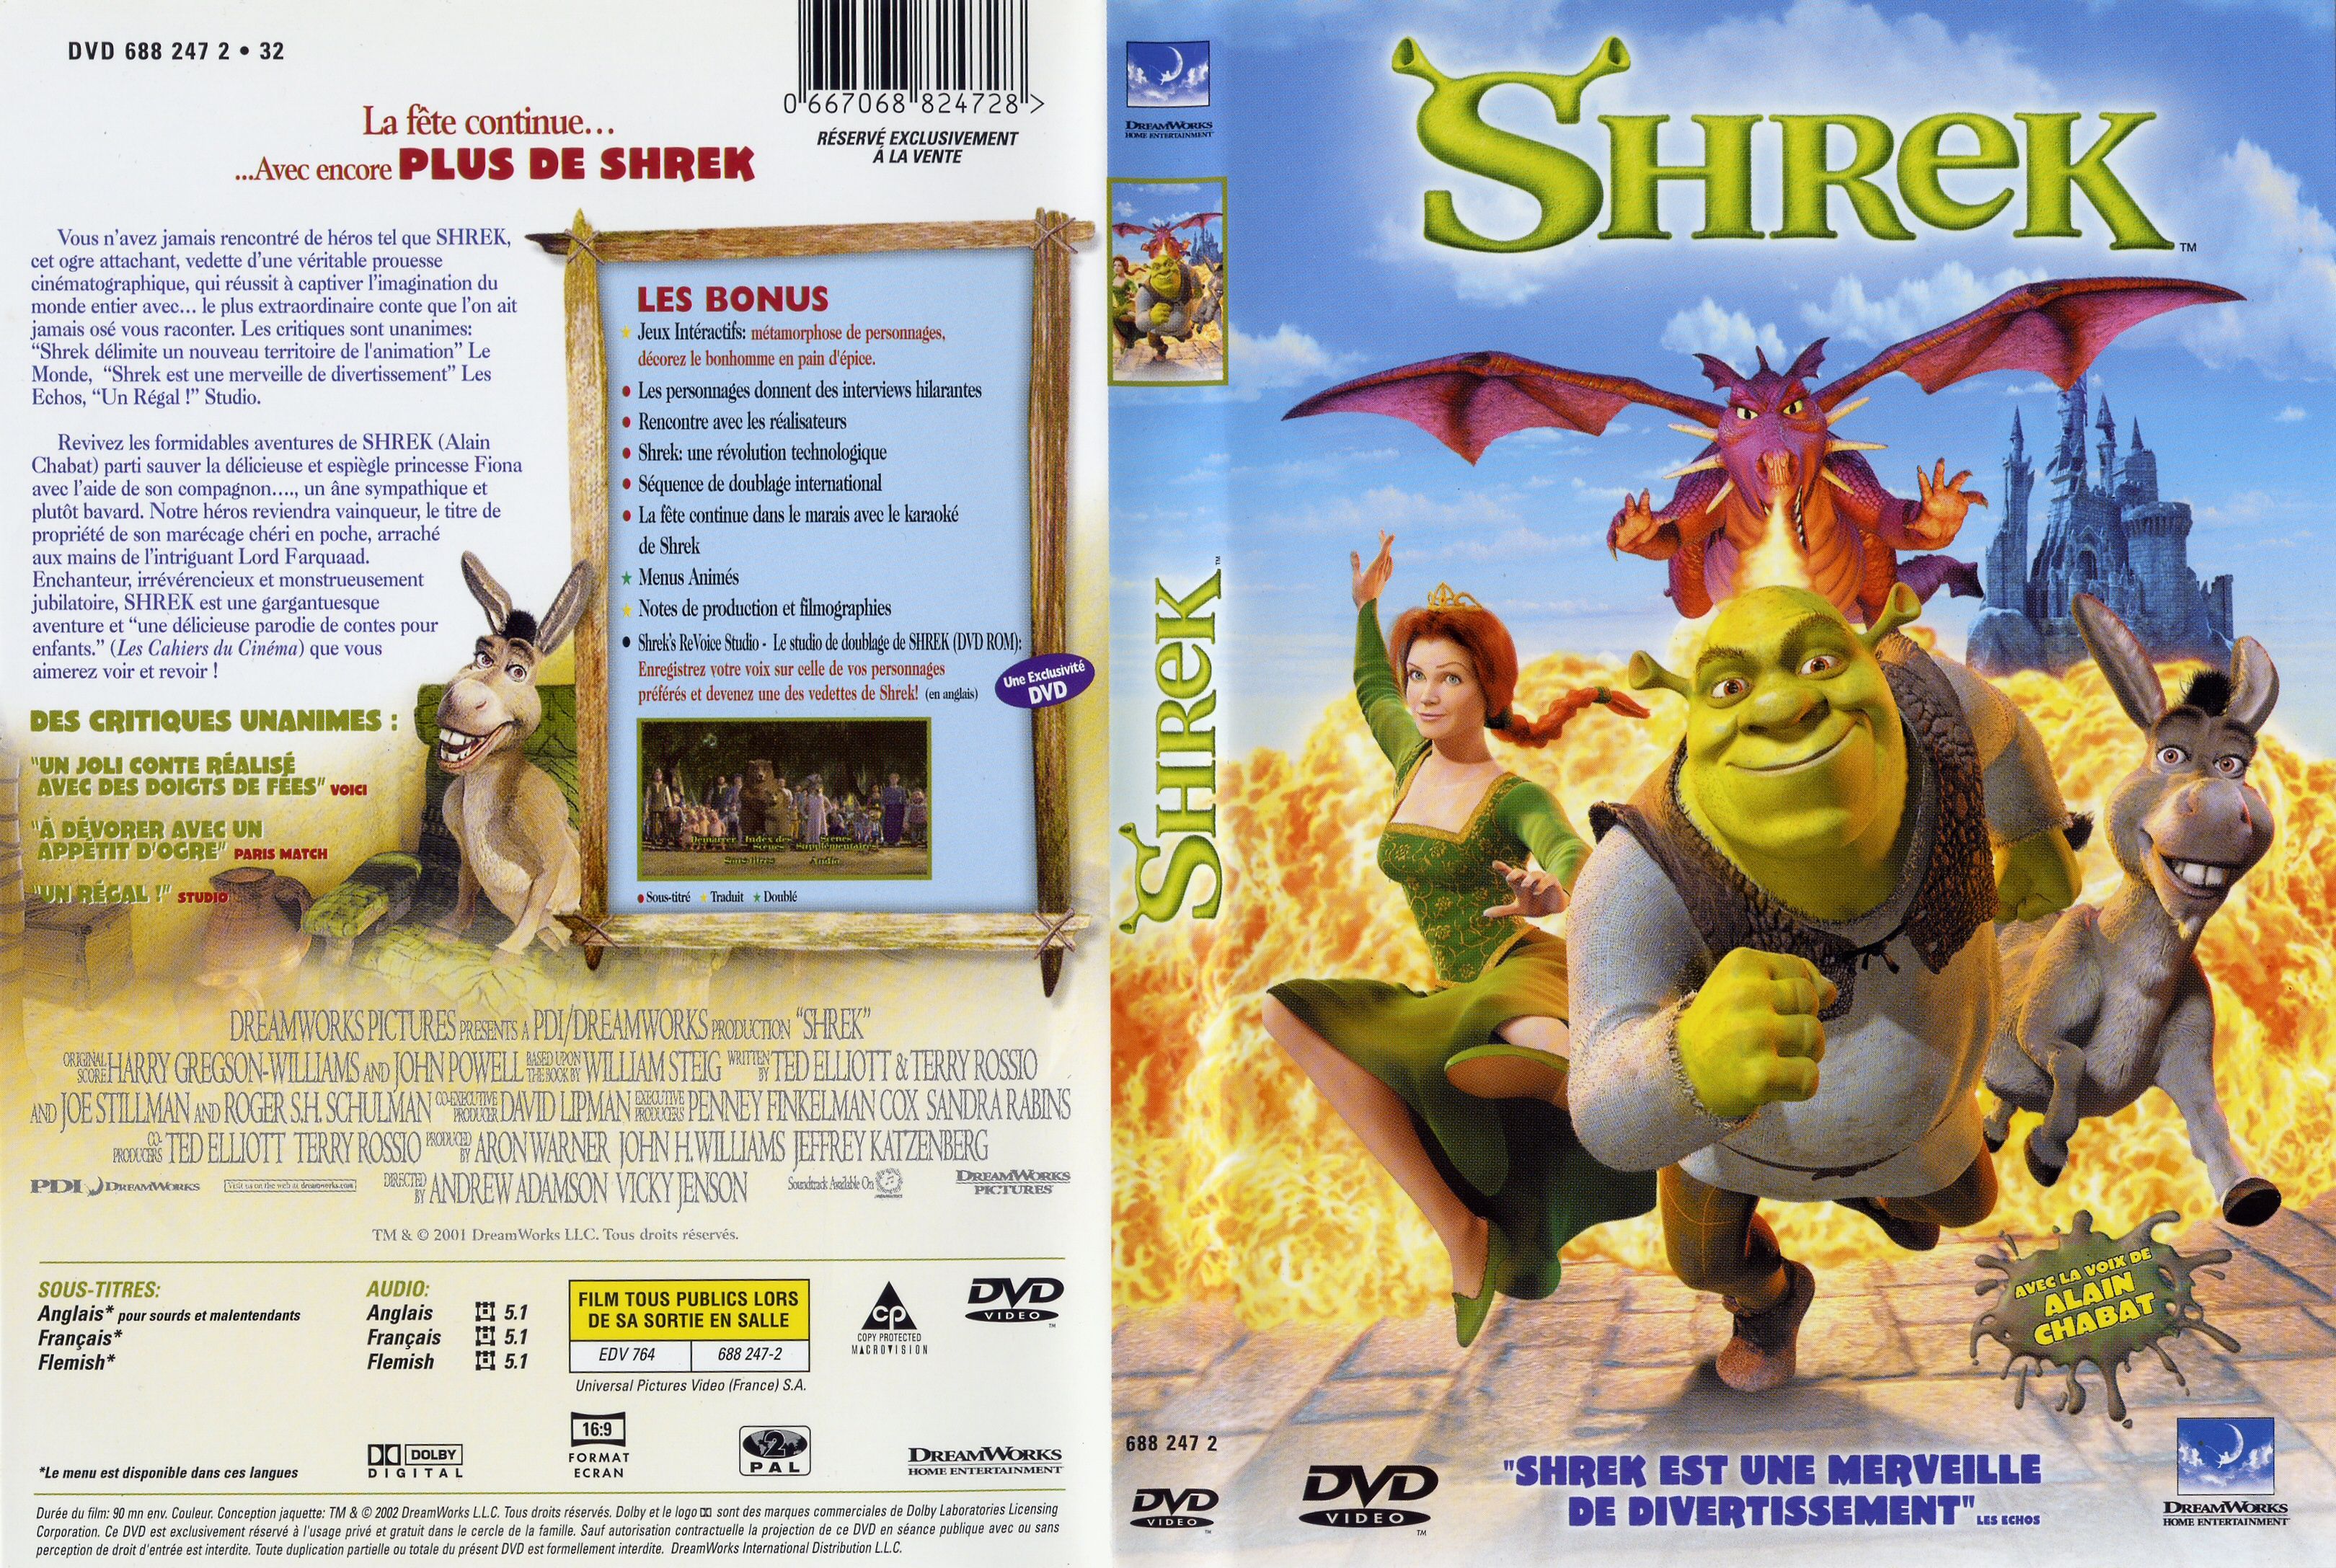 Jaquette DVD Shrek